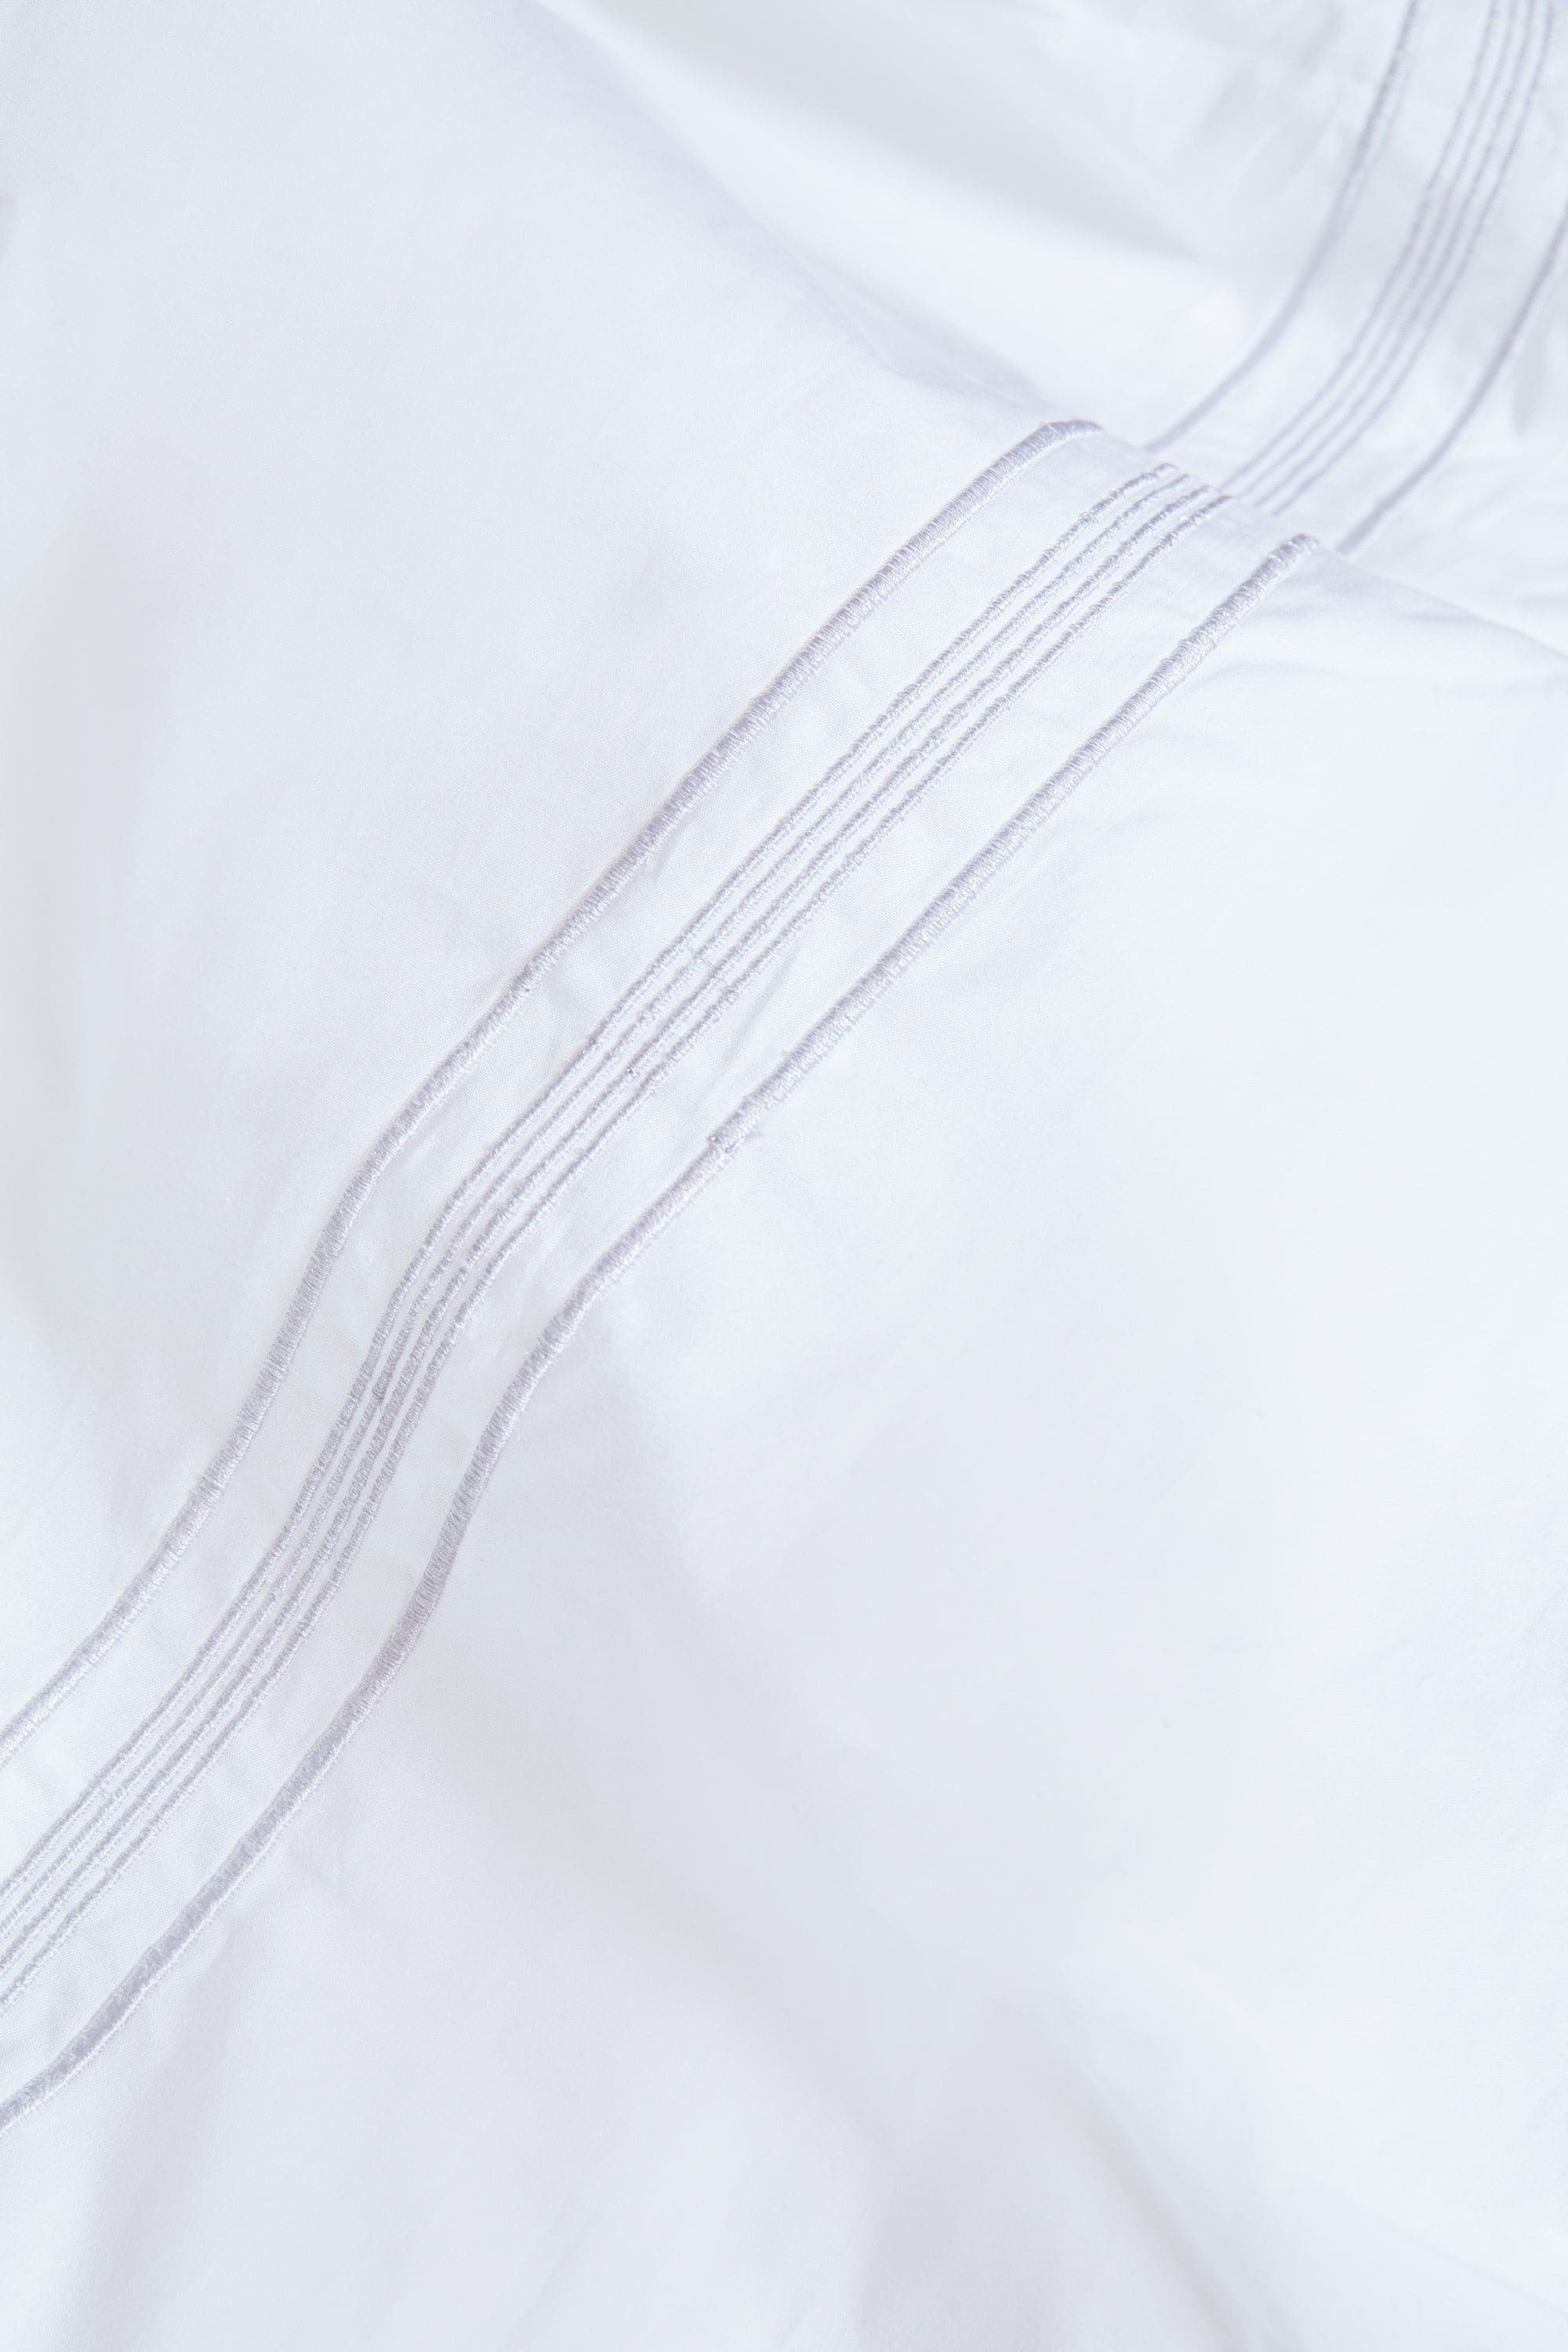 Royal Embroidered Bed Sheet Set *Simplicity*- Bridal finds